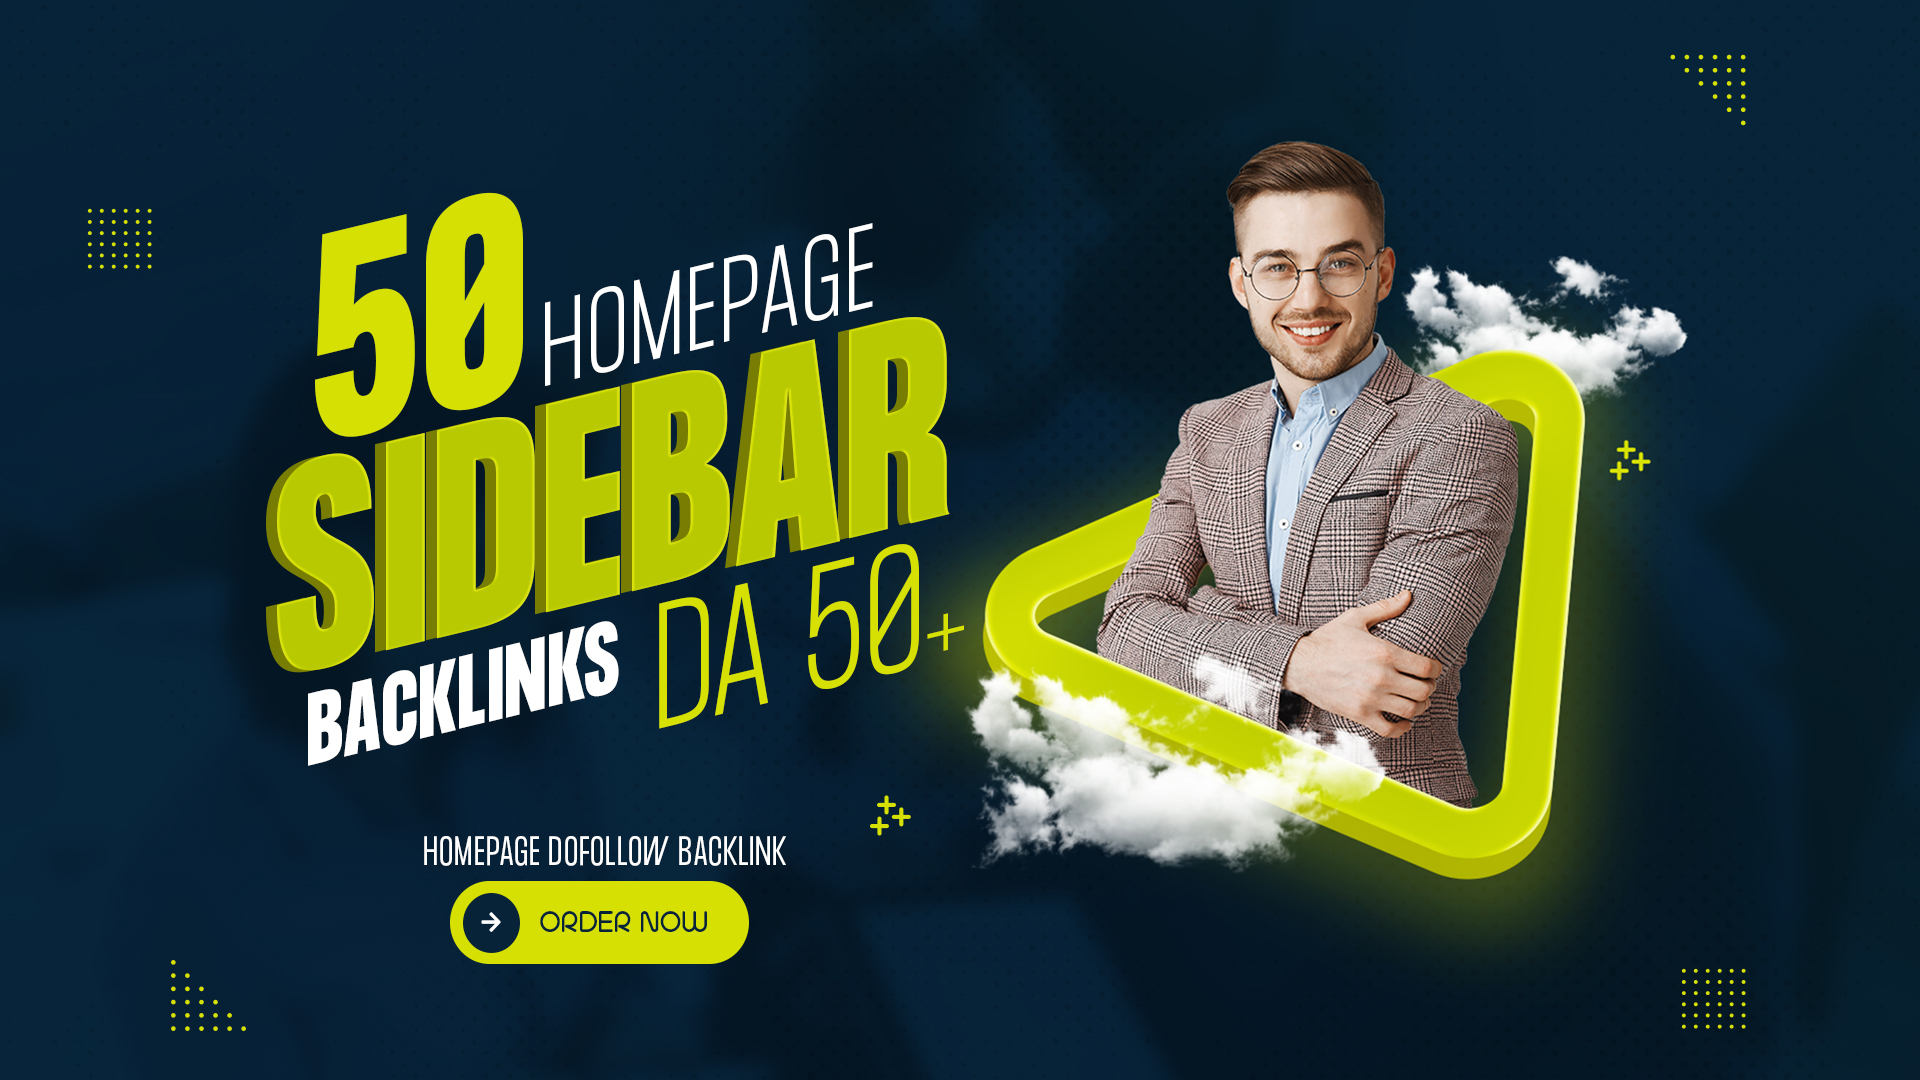 Get 50 SideBar Permanent HomePage Dofollow PBN Backlinks On DA 50+ Websites - BlogRoll - Footer